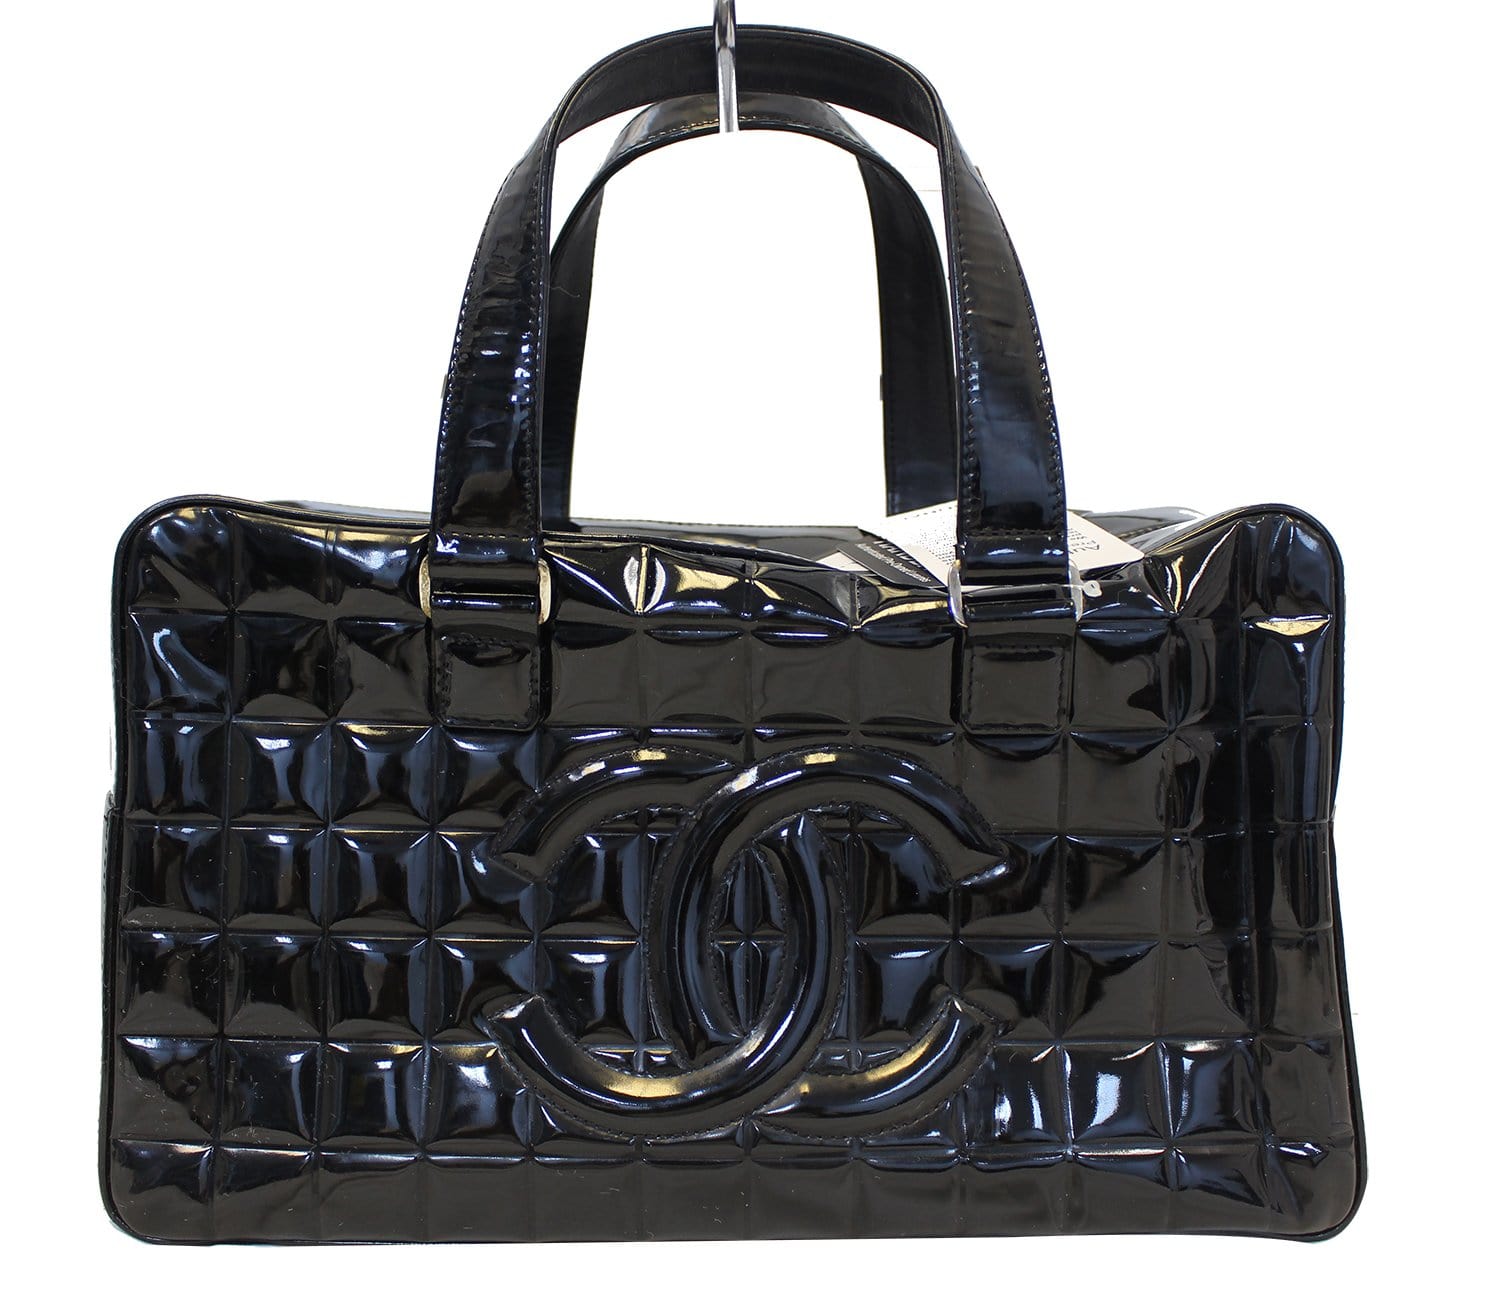 CHANEL Black Patent Leather Triple Coco Tote Bag